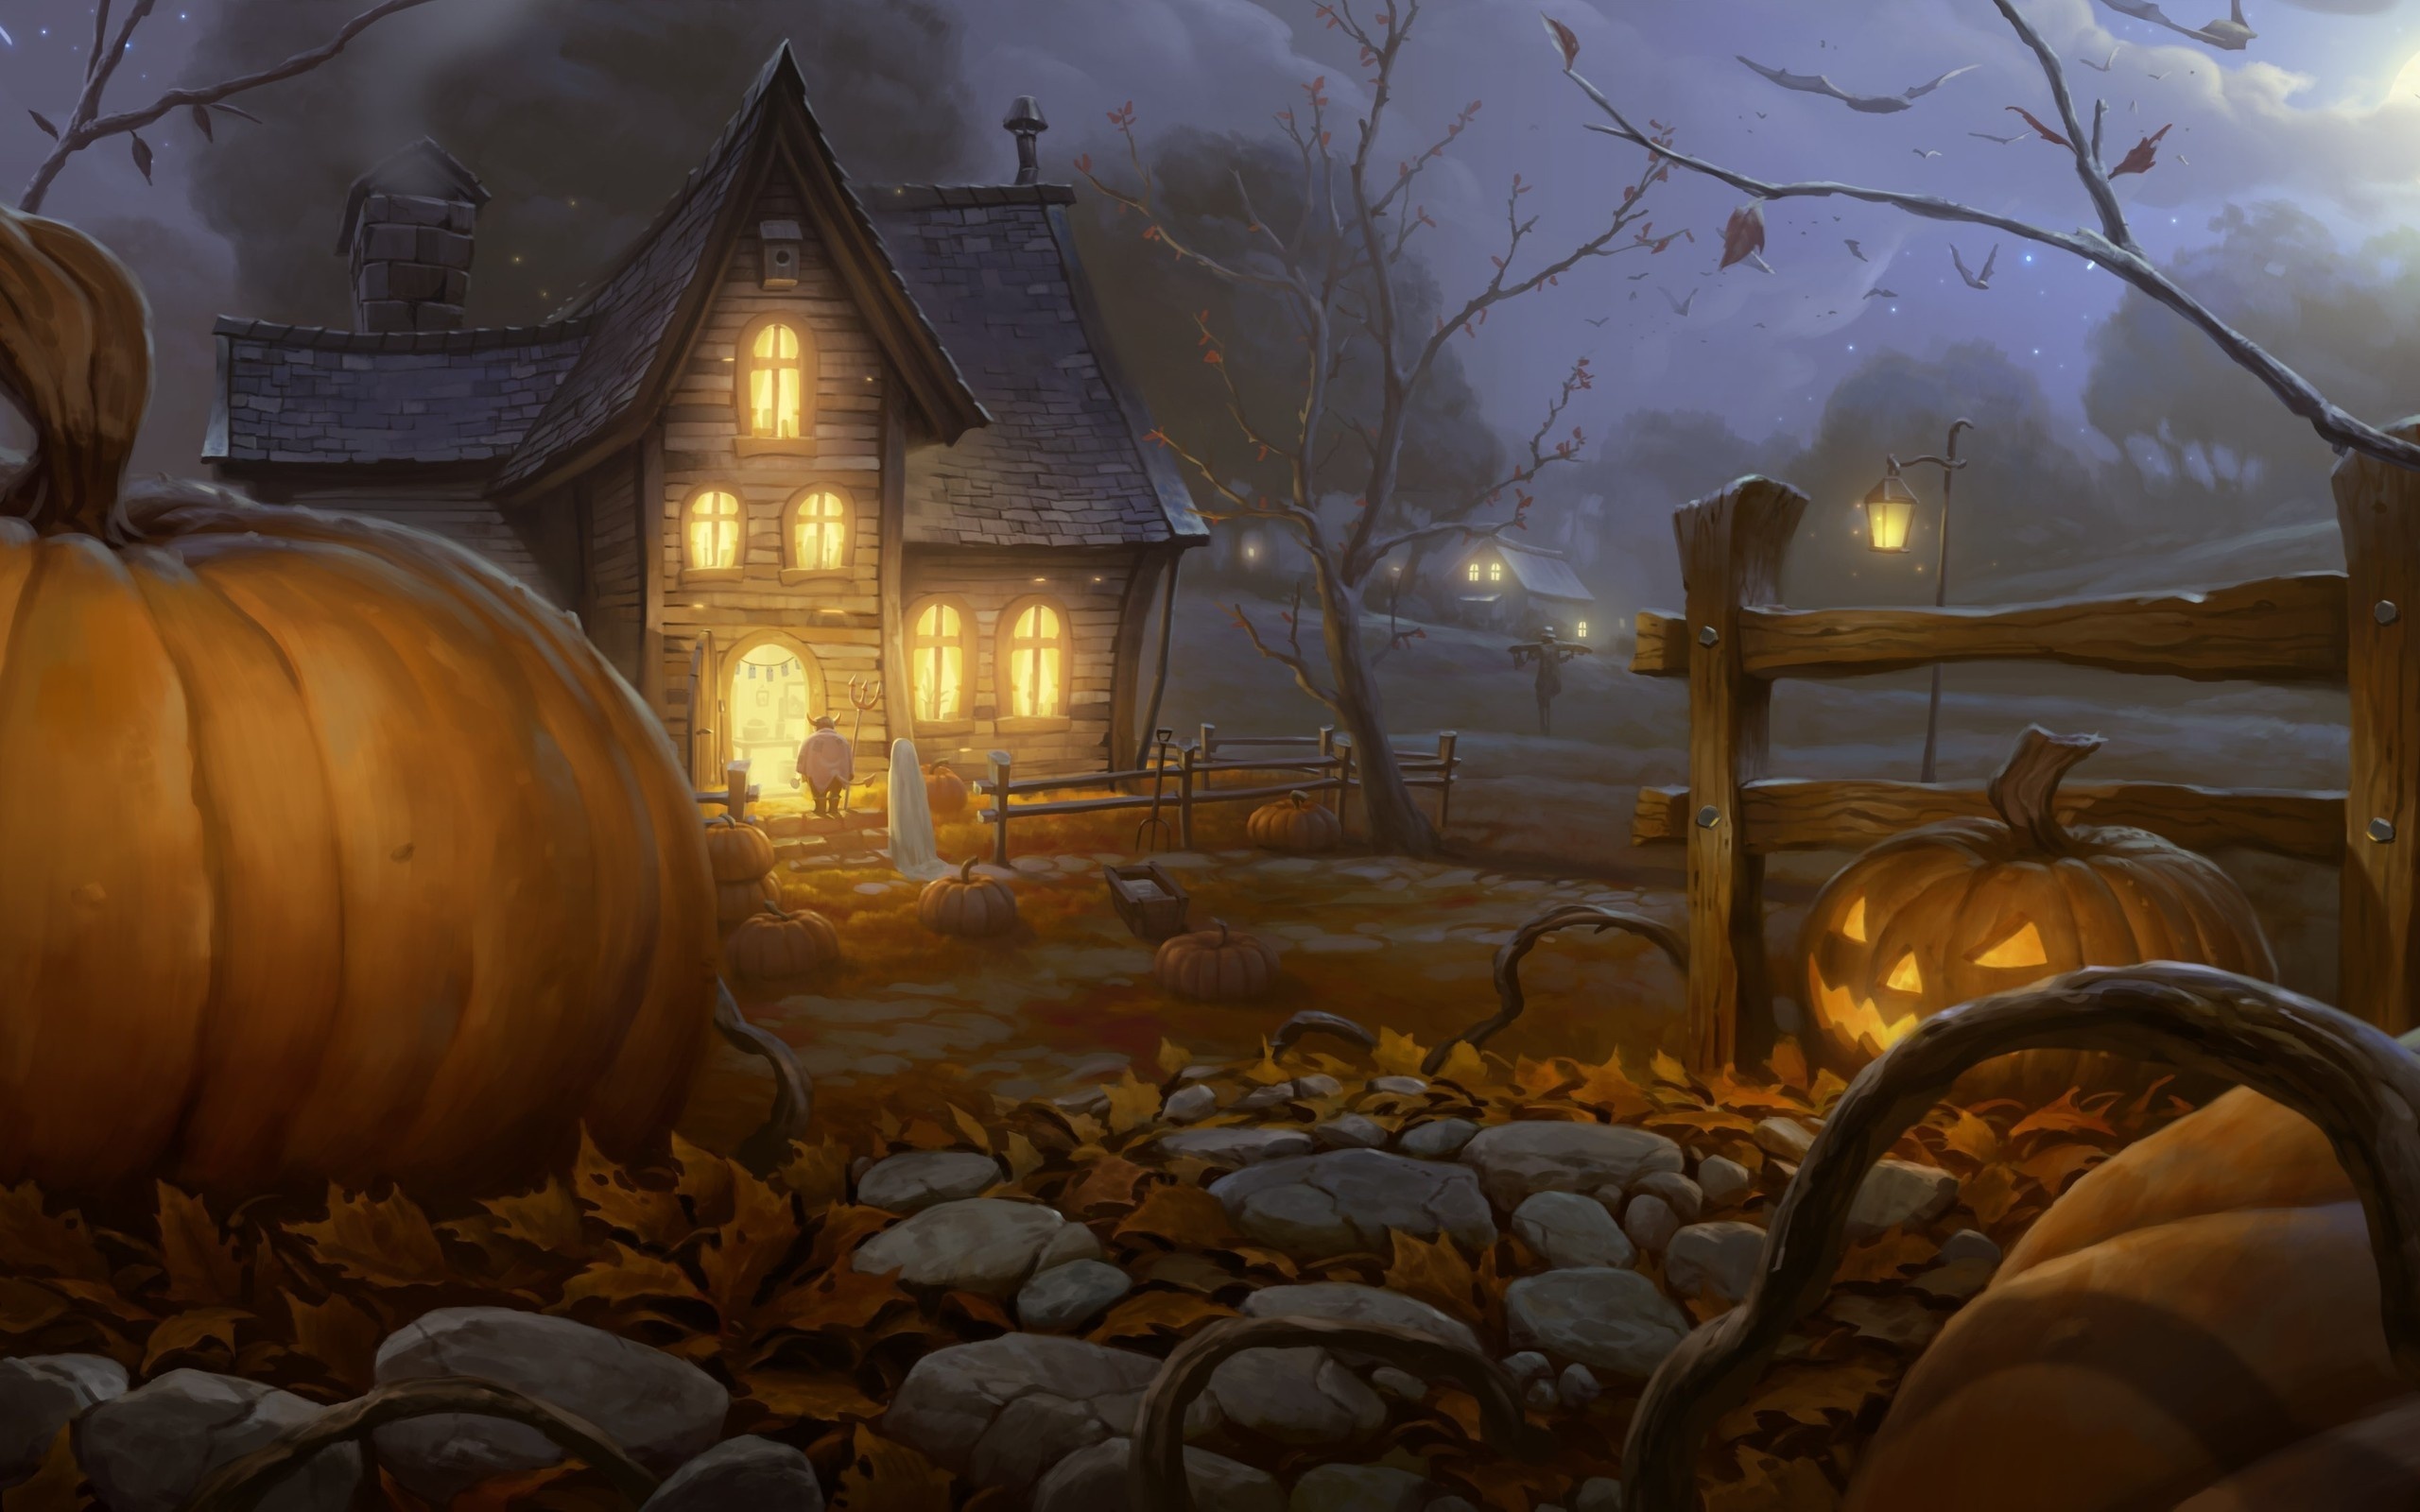 Halloween-Painting-2560x1600-dusicky-obrazky-na-plochu